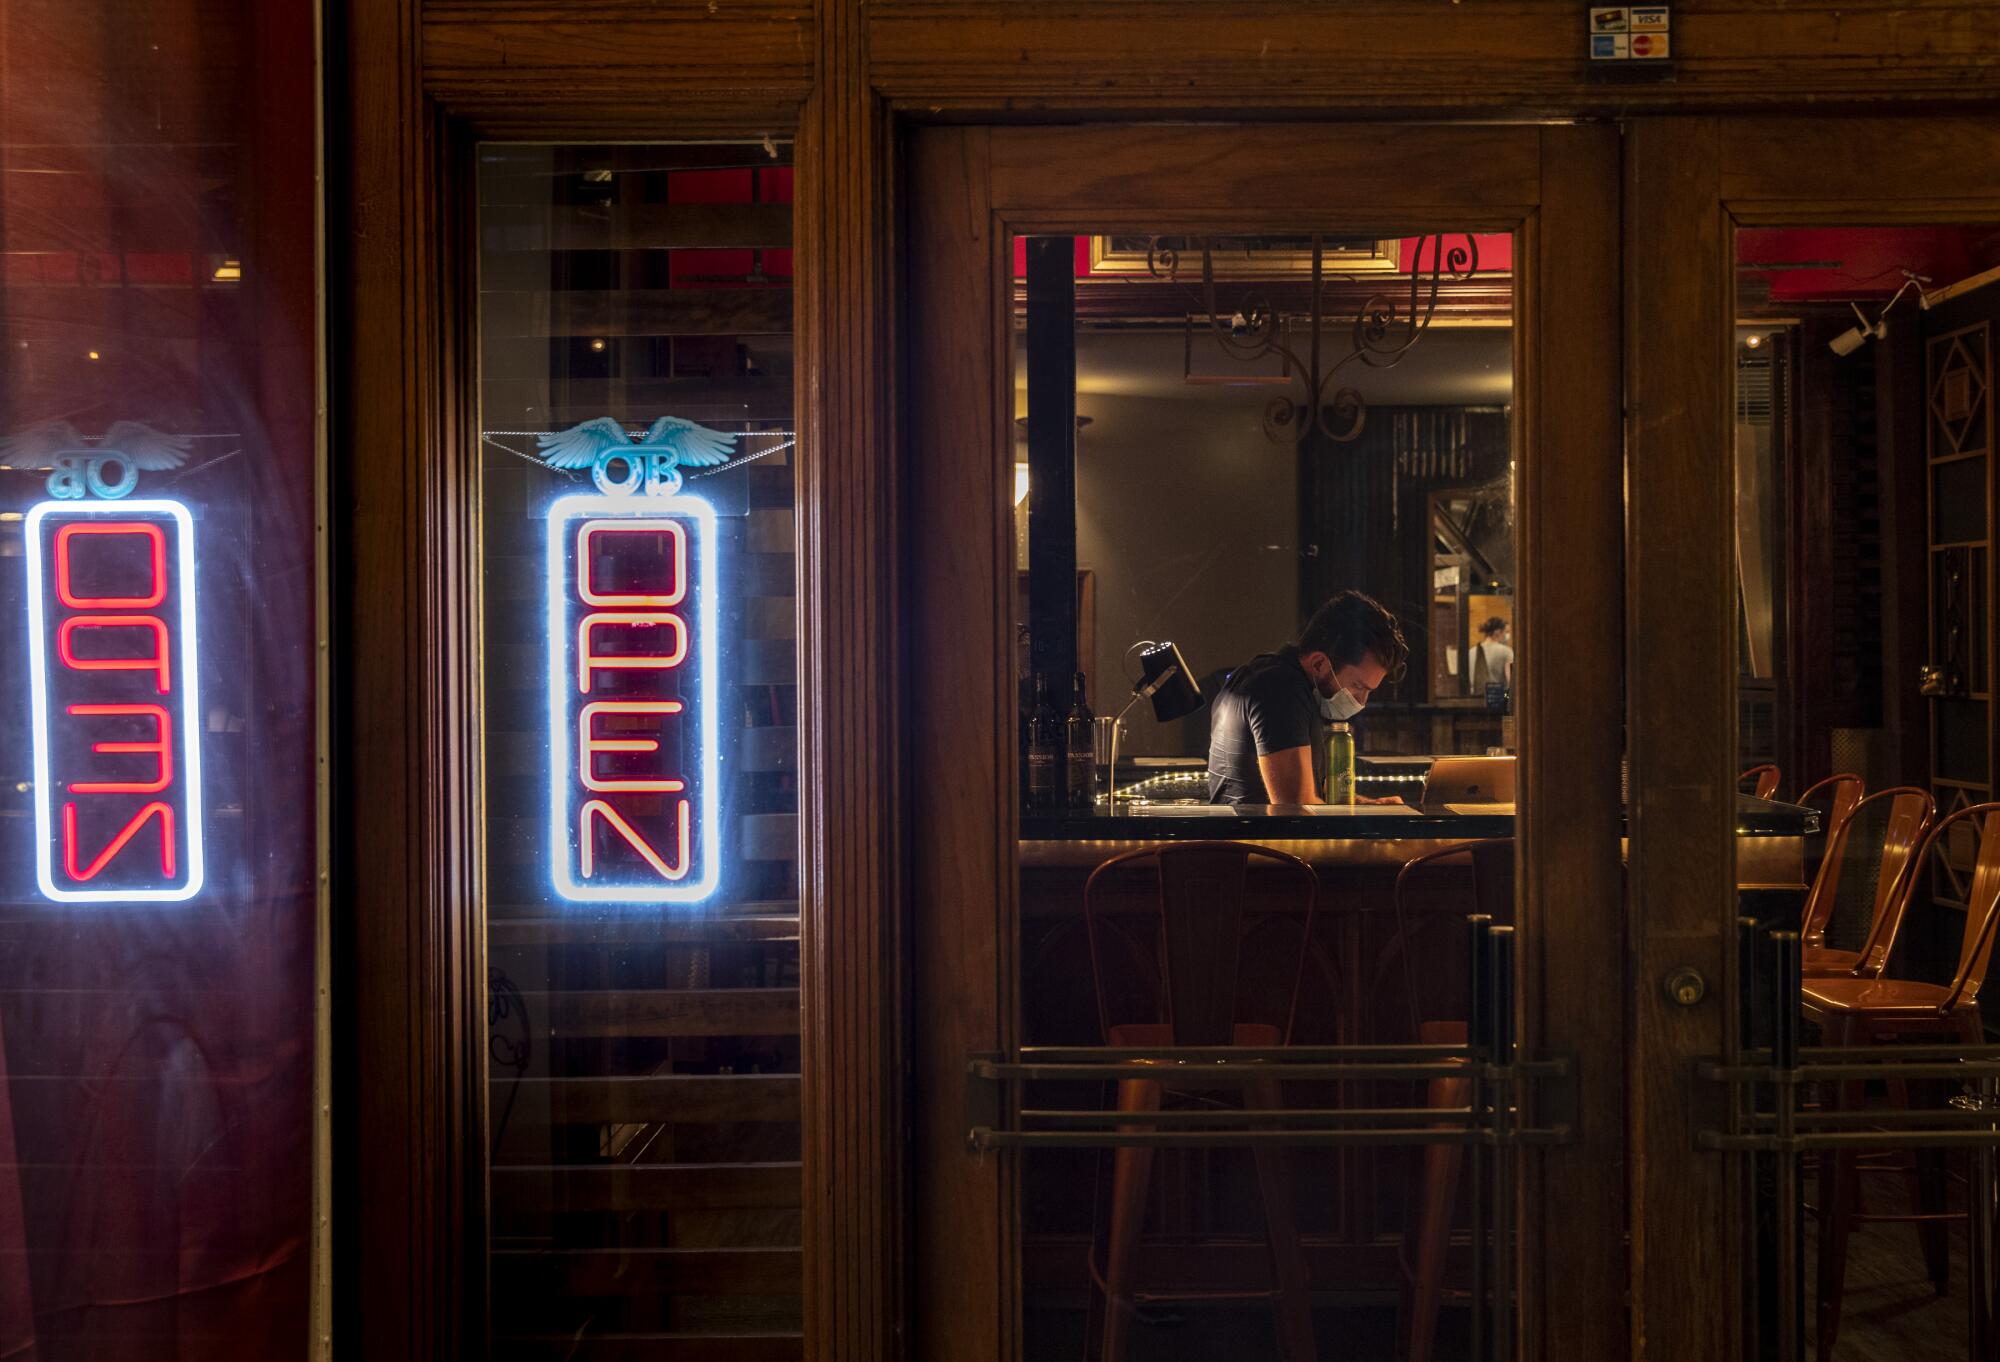 Tasting room associate Dakota Croog waits for customers at Passion Cellars, a wine tasting bar in Bisbee.